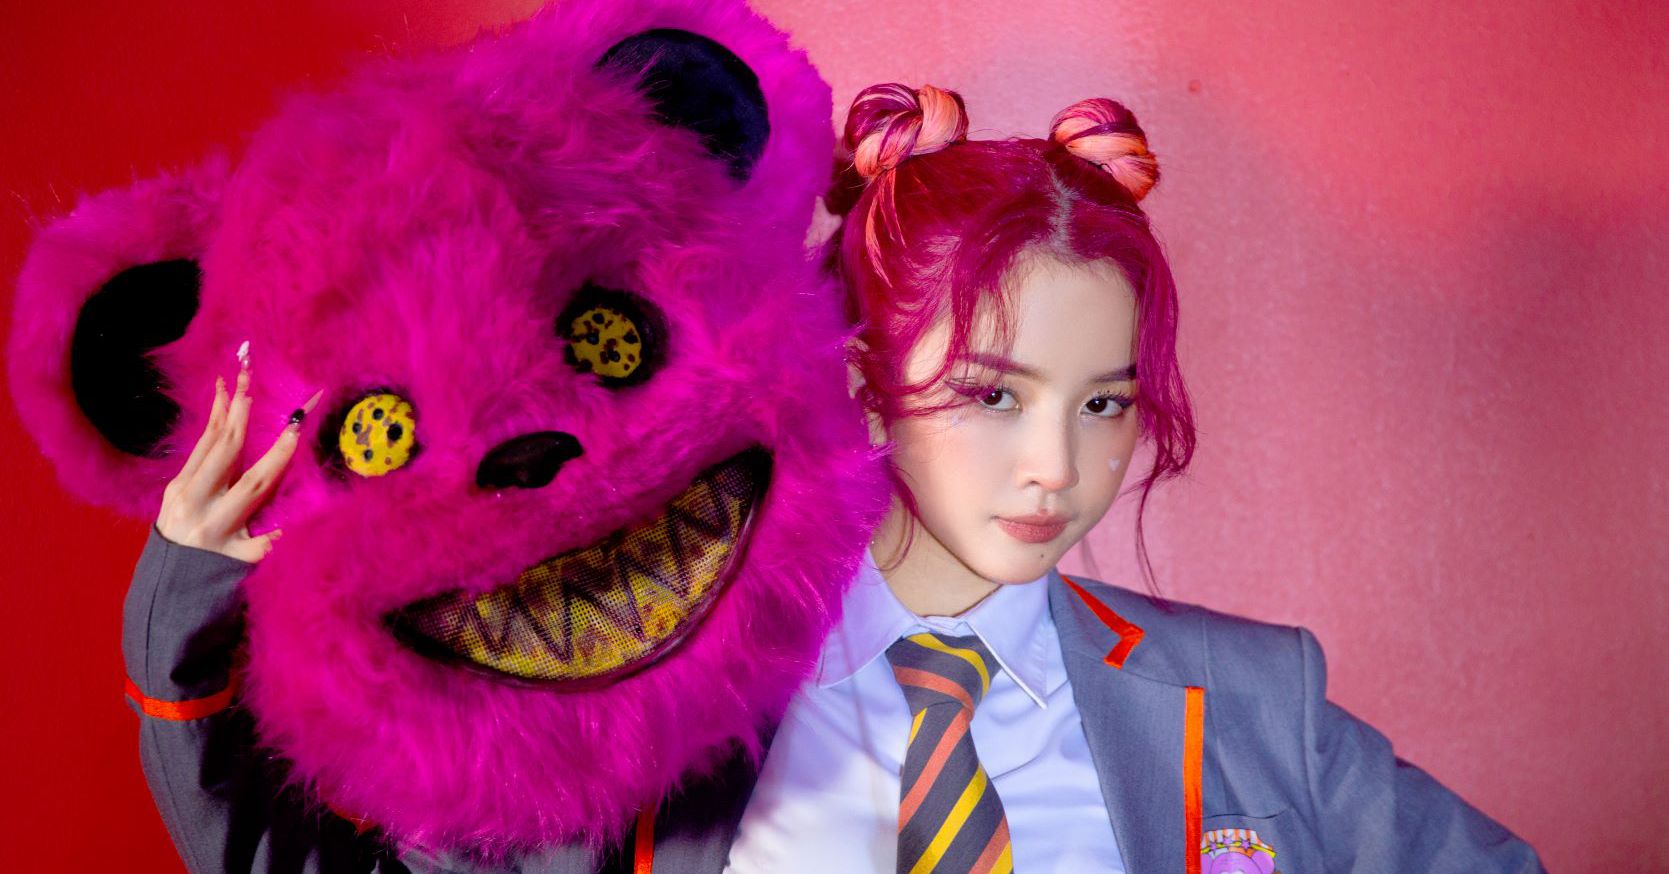 DJ Mie released a horror video on International Children’s Day June 1